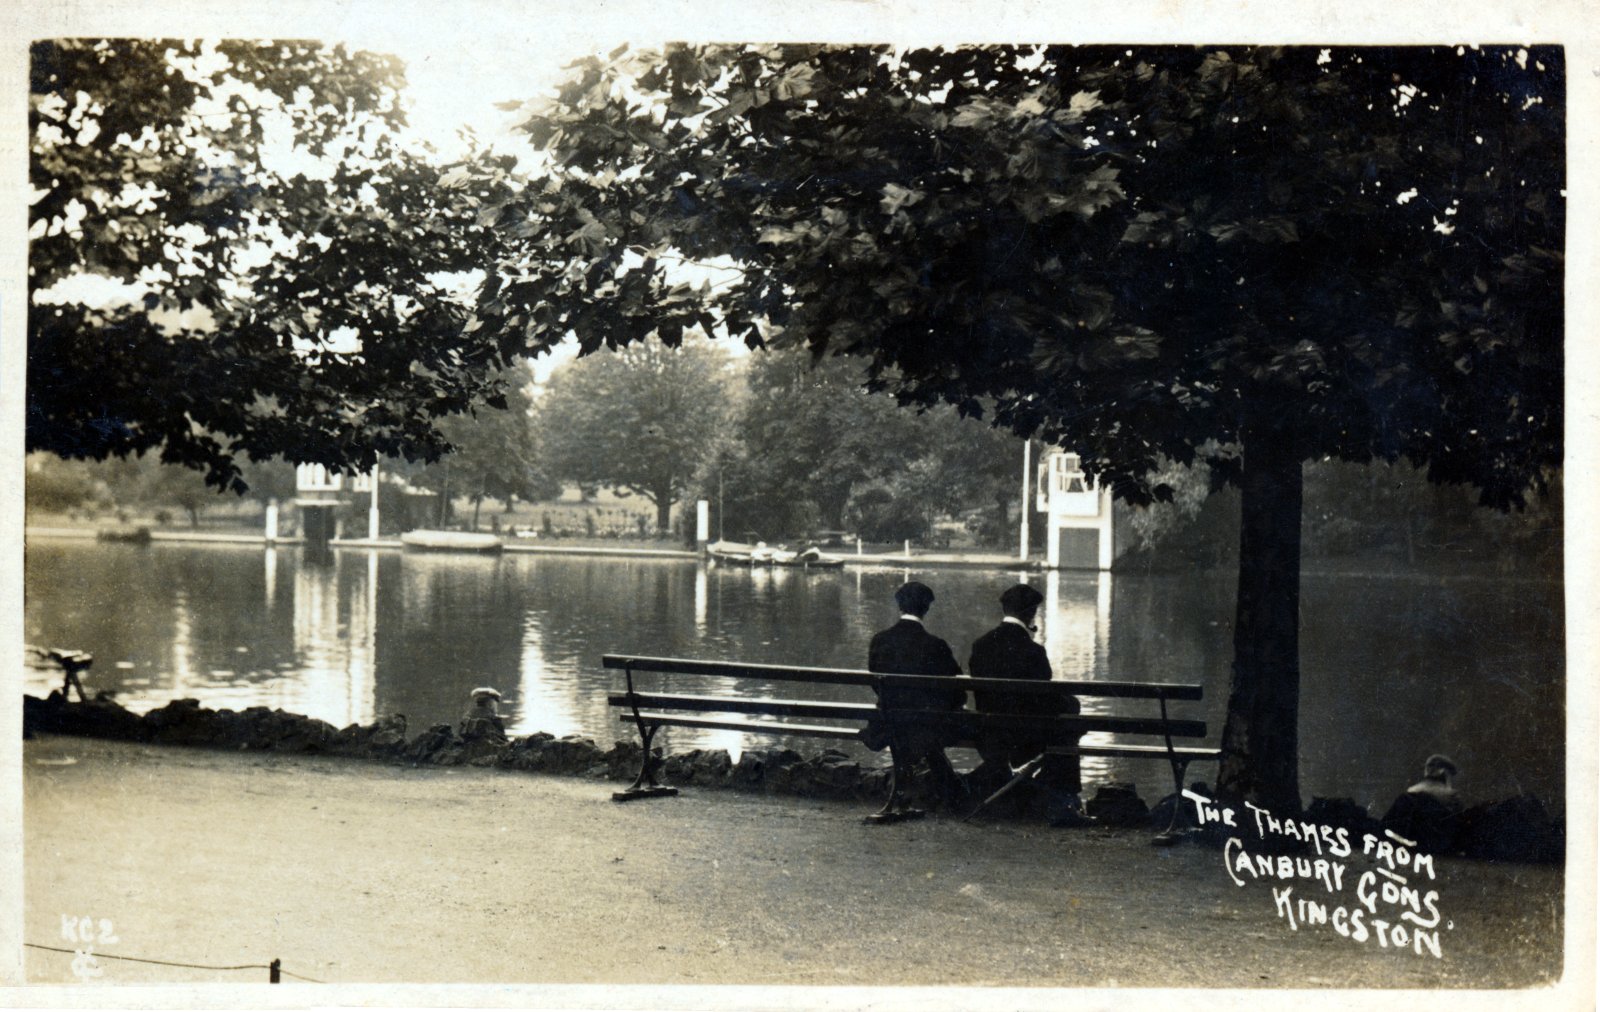 Kingston Canbury Gardens,river view